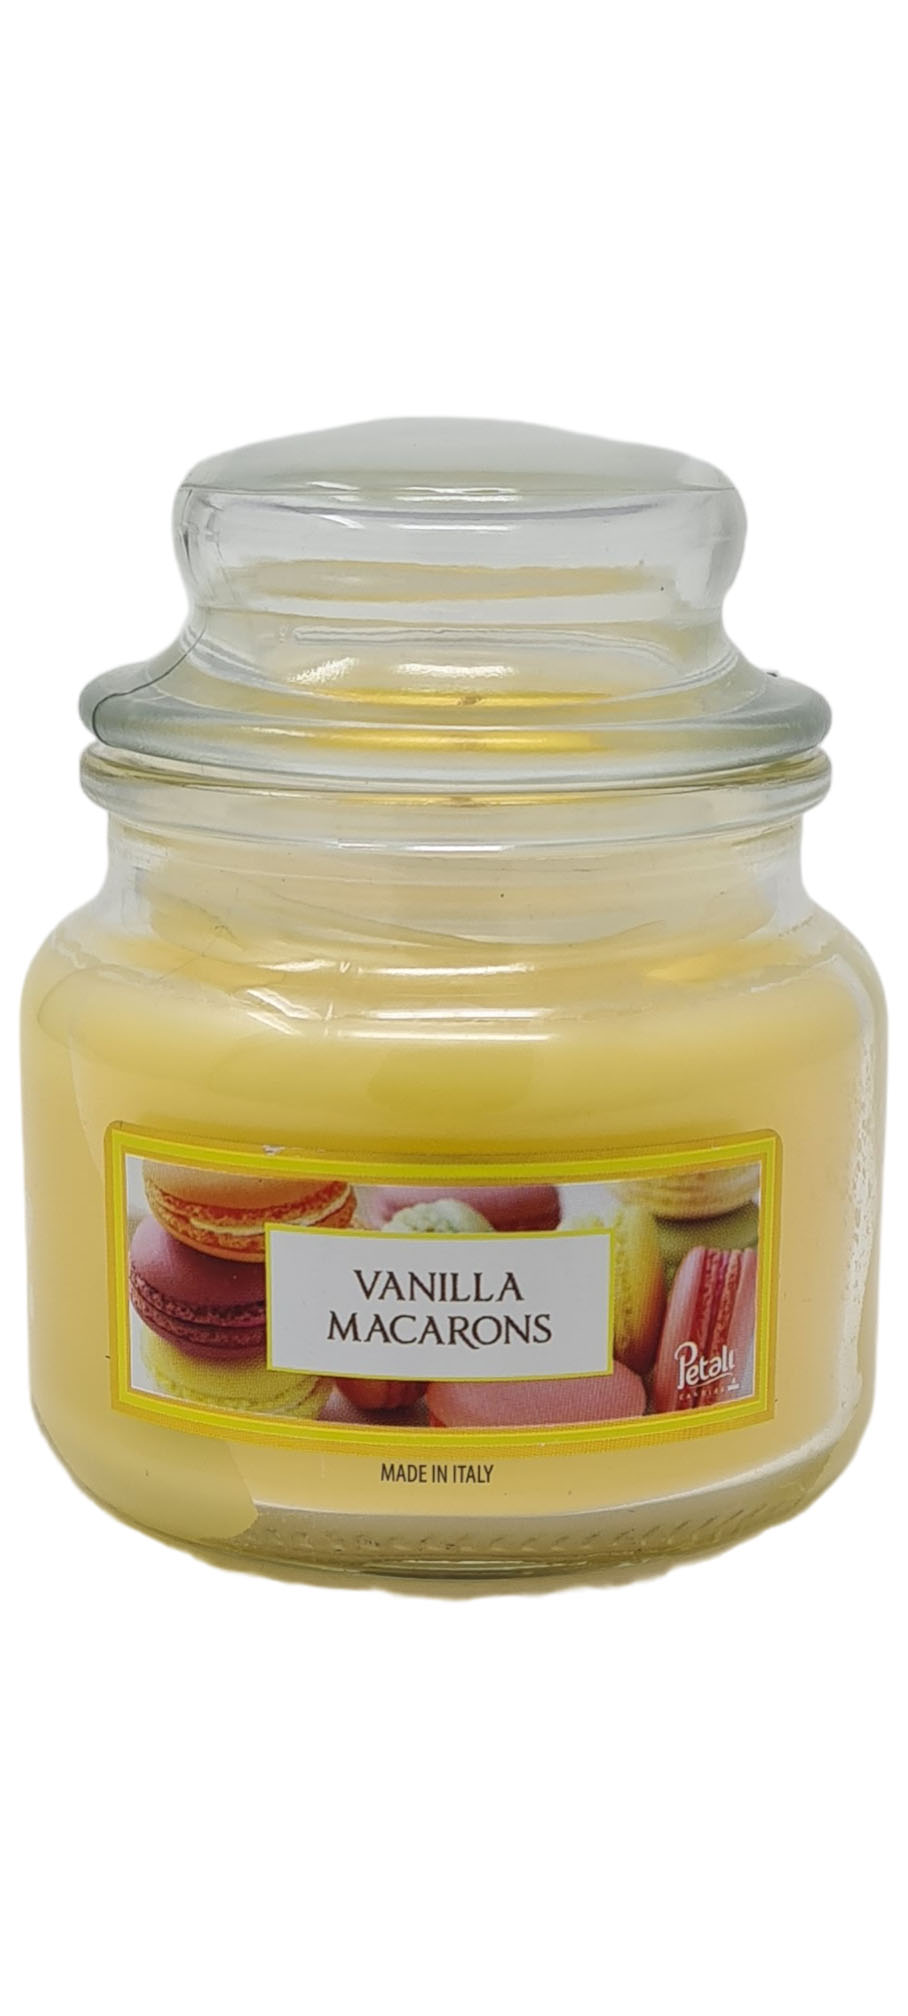 00111 - Kerzen im Glas 100g- Vanilla Macarons